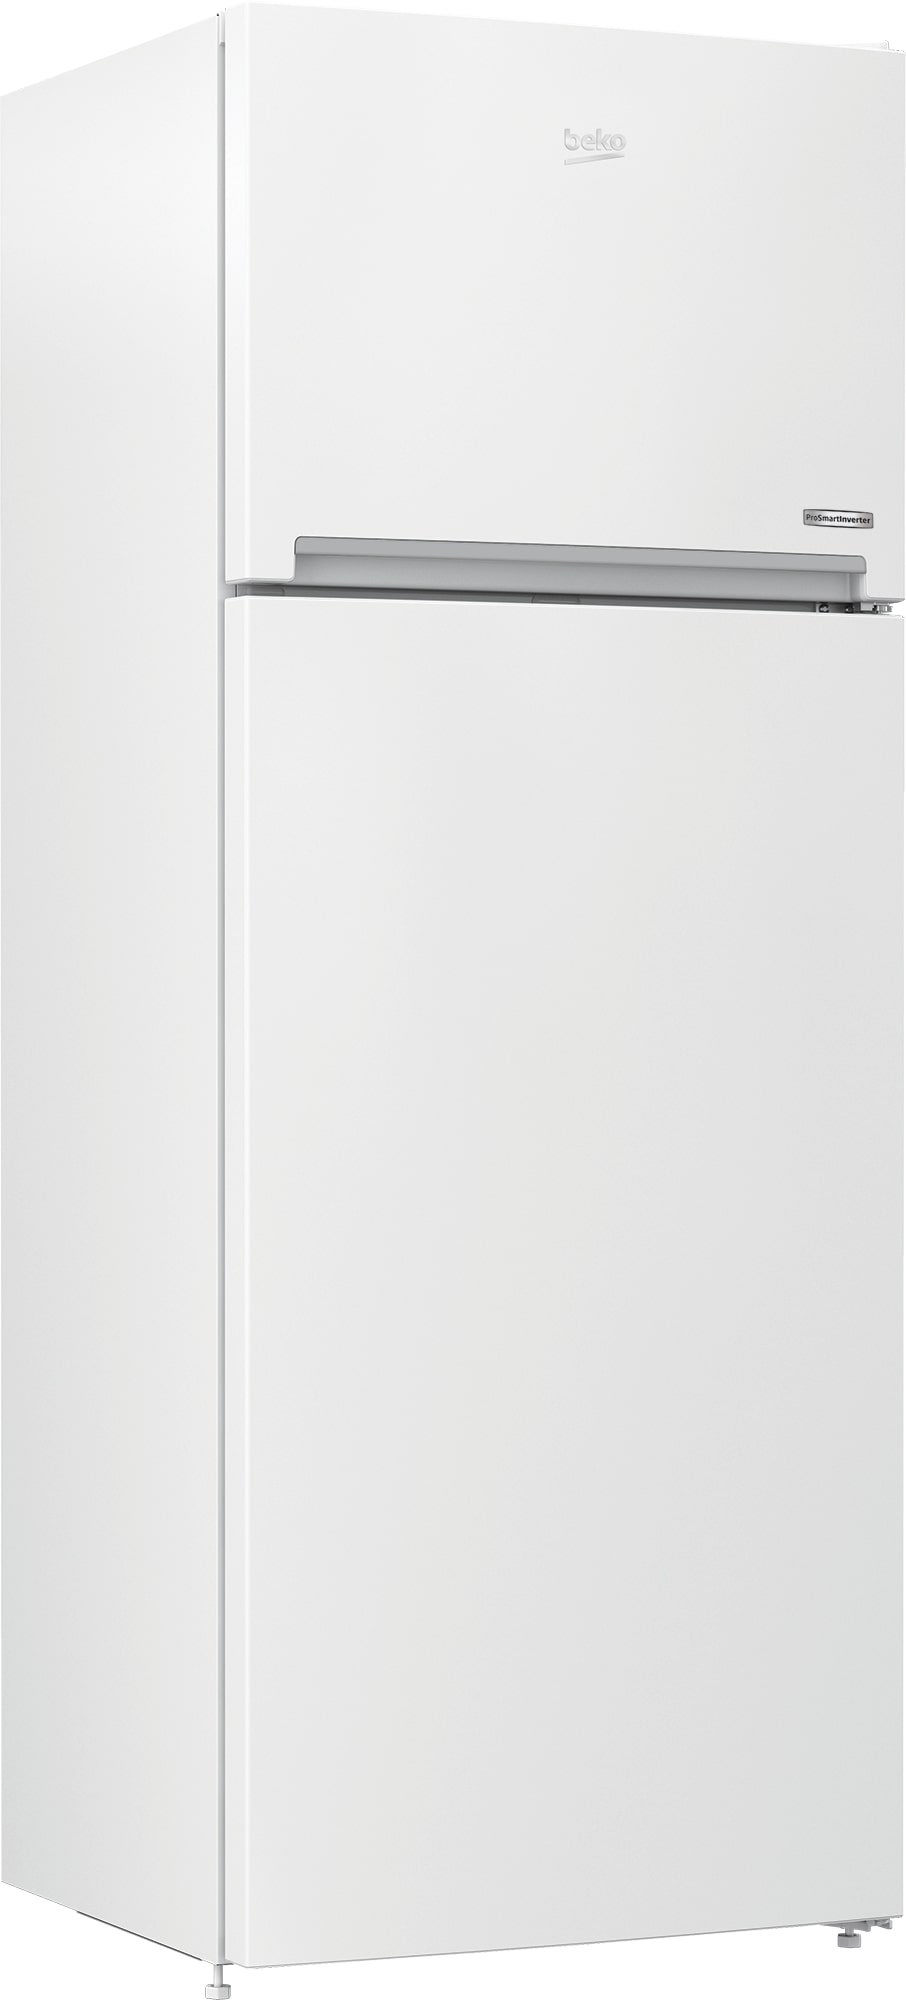 Beko Refrigerator with Top Freezer - White